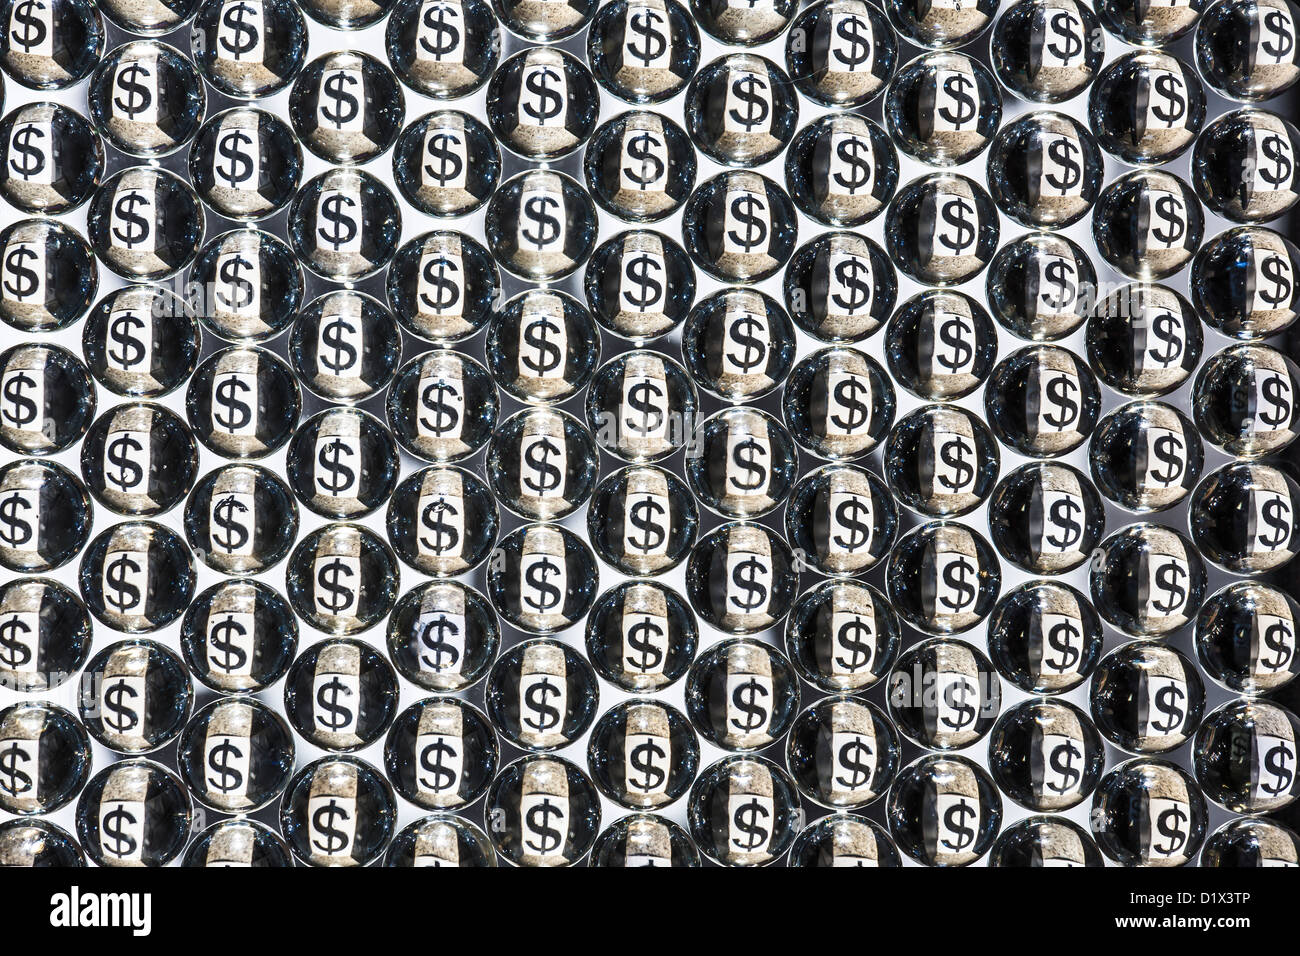 us dollar sign in matrix of tiny glass balls Stock Photo